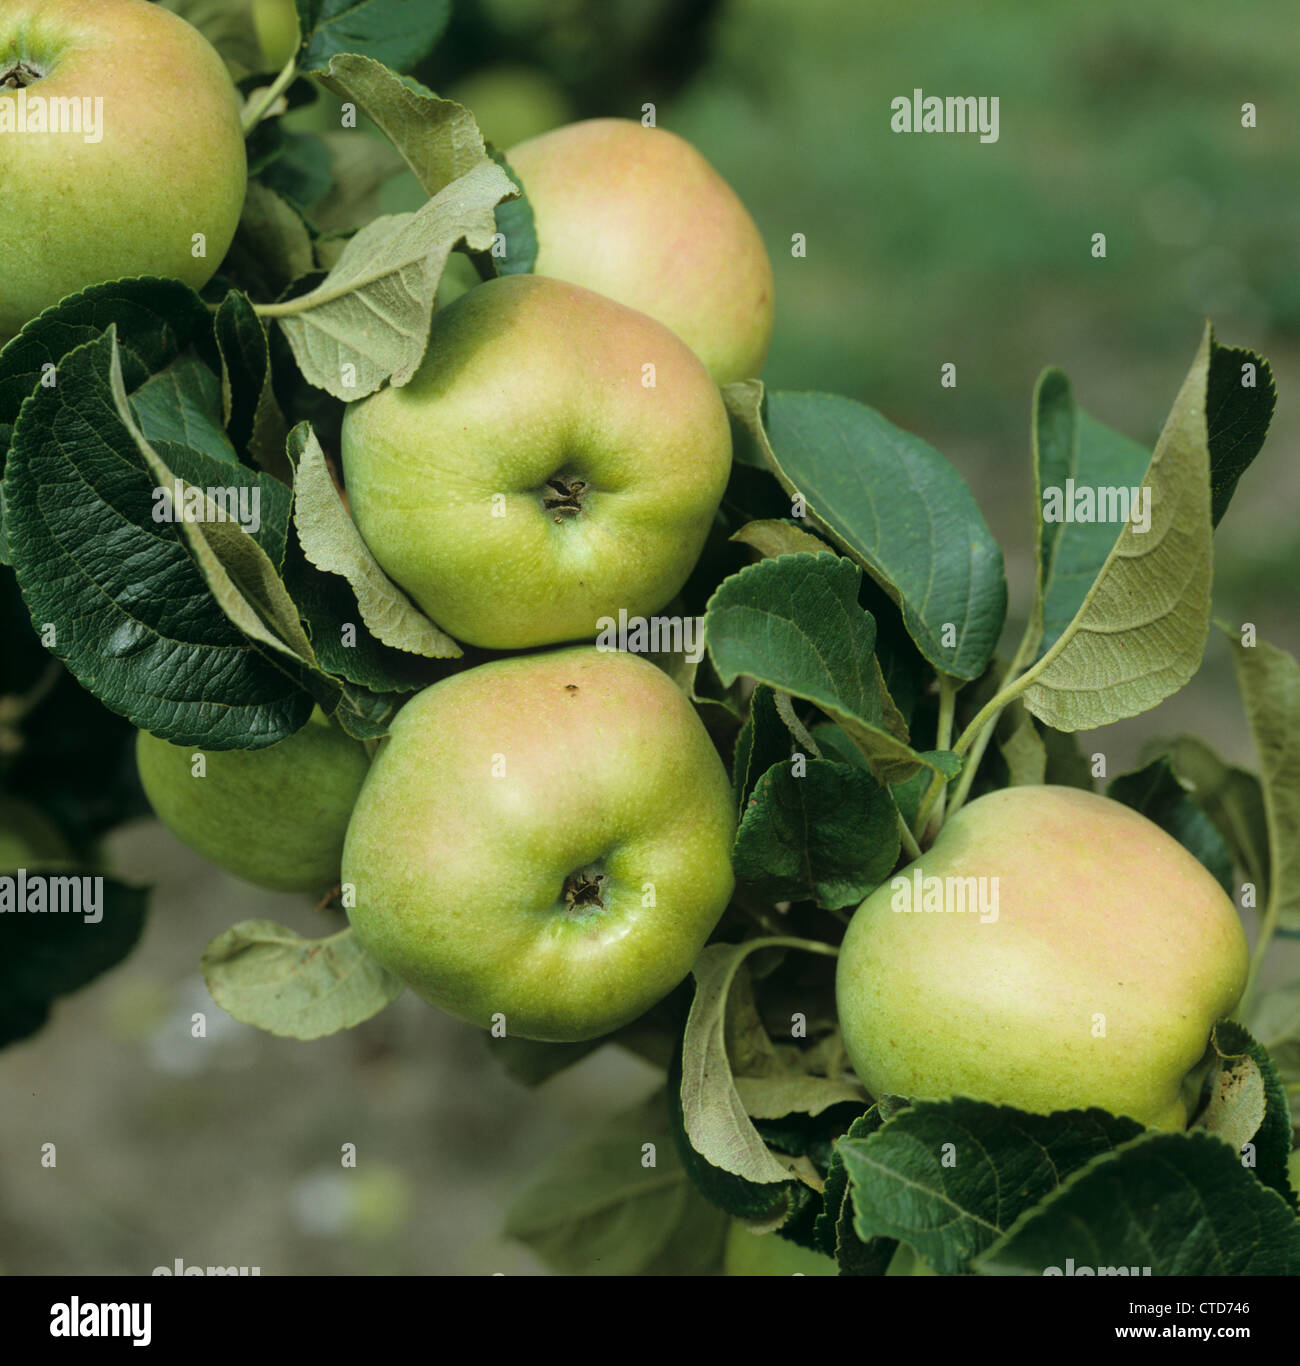 Mature Bramley apple fruit (Malus communis) on the tree Stock Photo